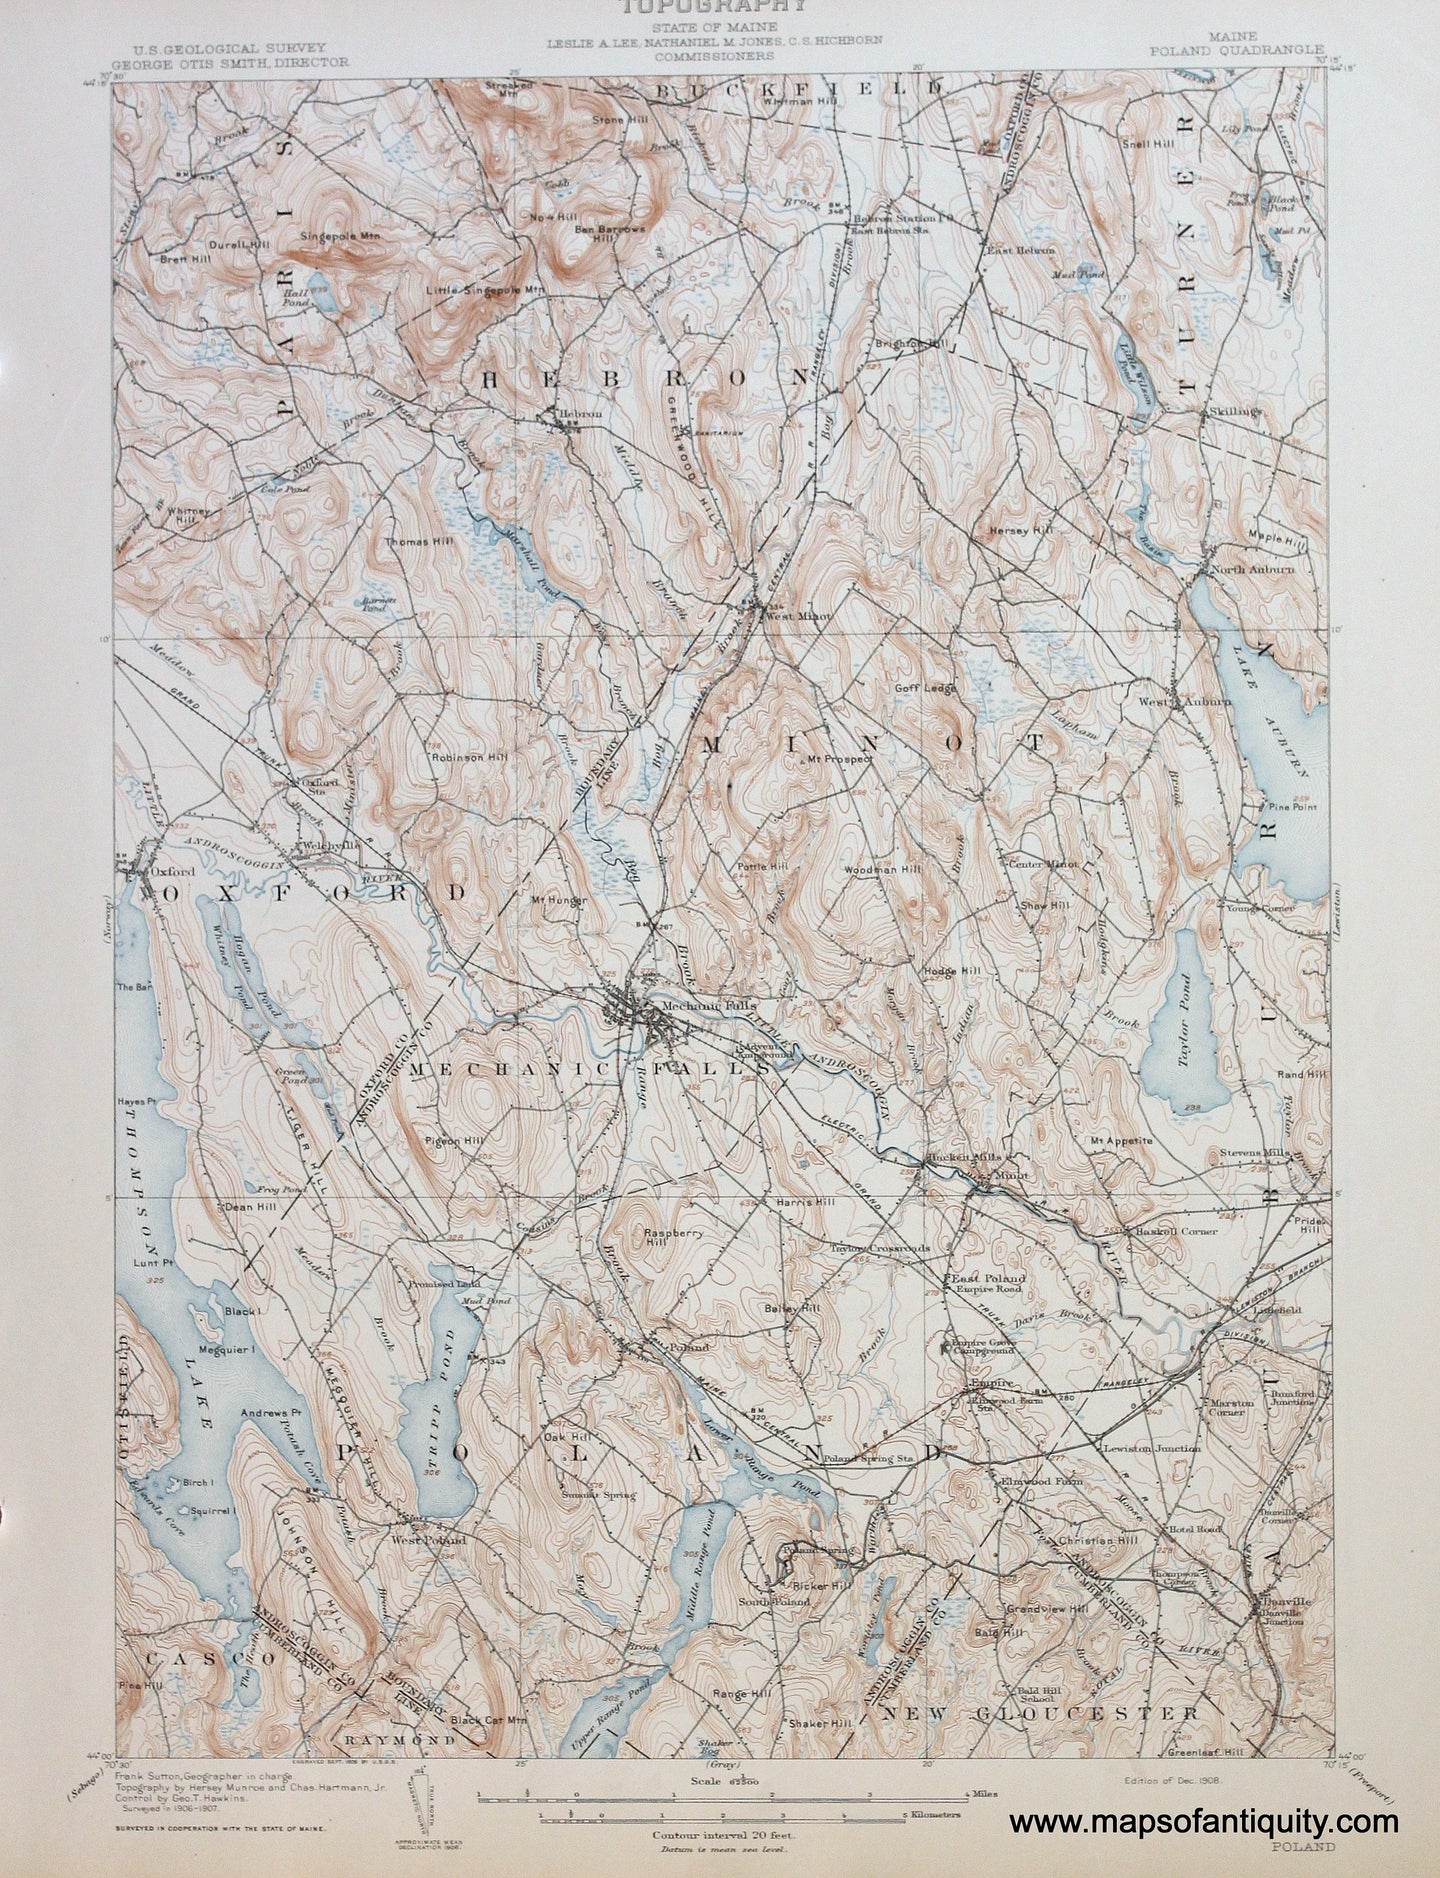 Genuine-Antique-Map-Poland-Maine--1908-US-Geological-Survey--Maps-Of-Antiquity